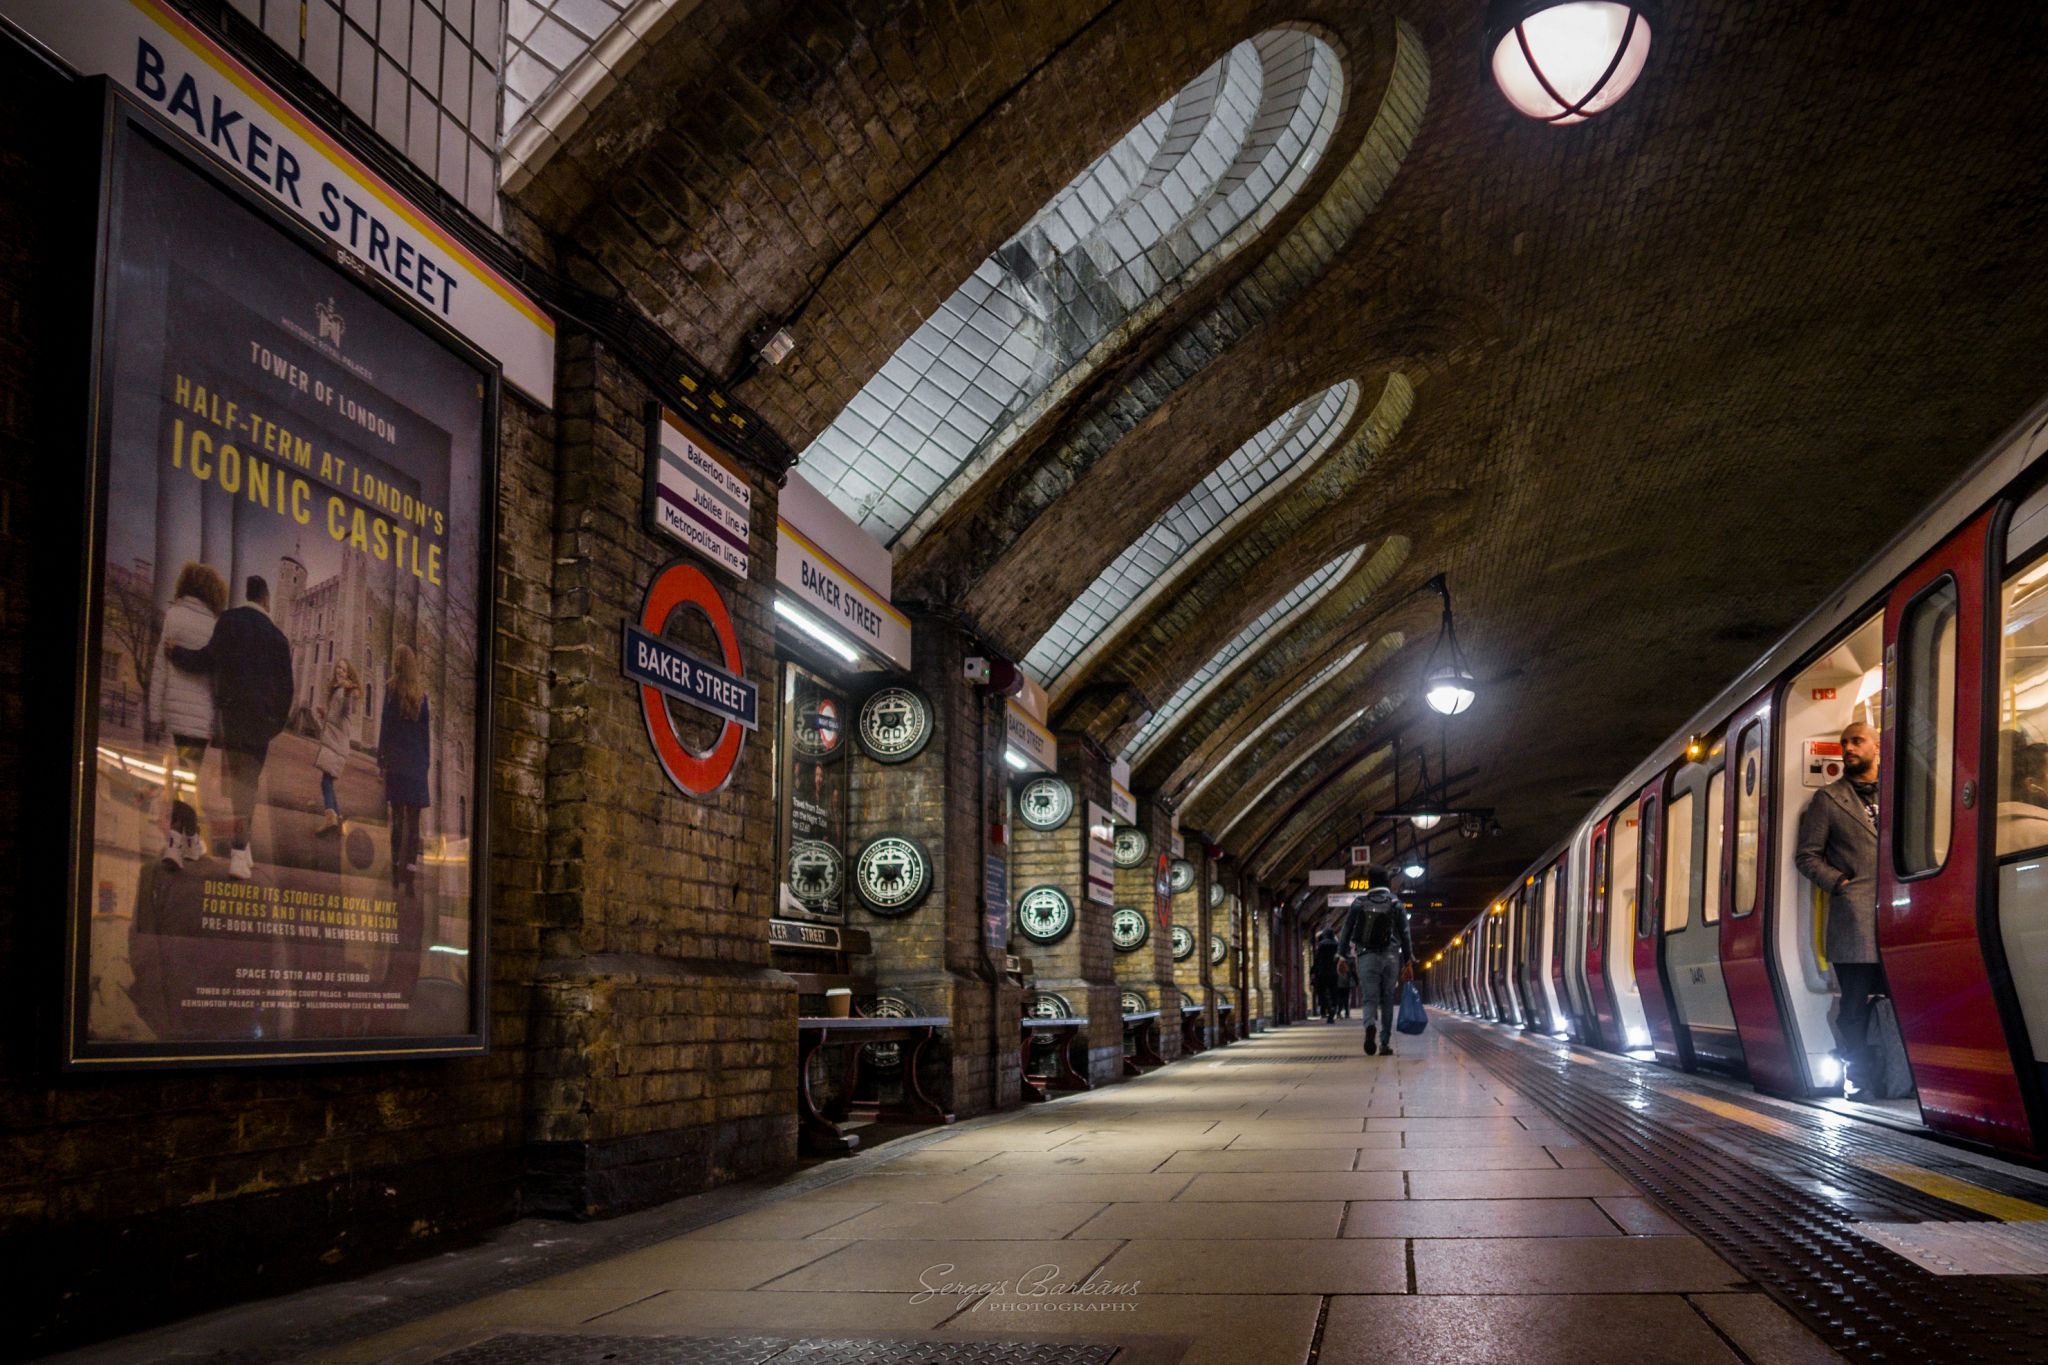 #london #underground #england #station #subway #perspective, Sergejs Barkans